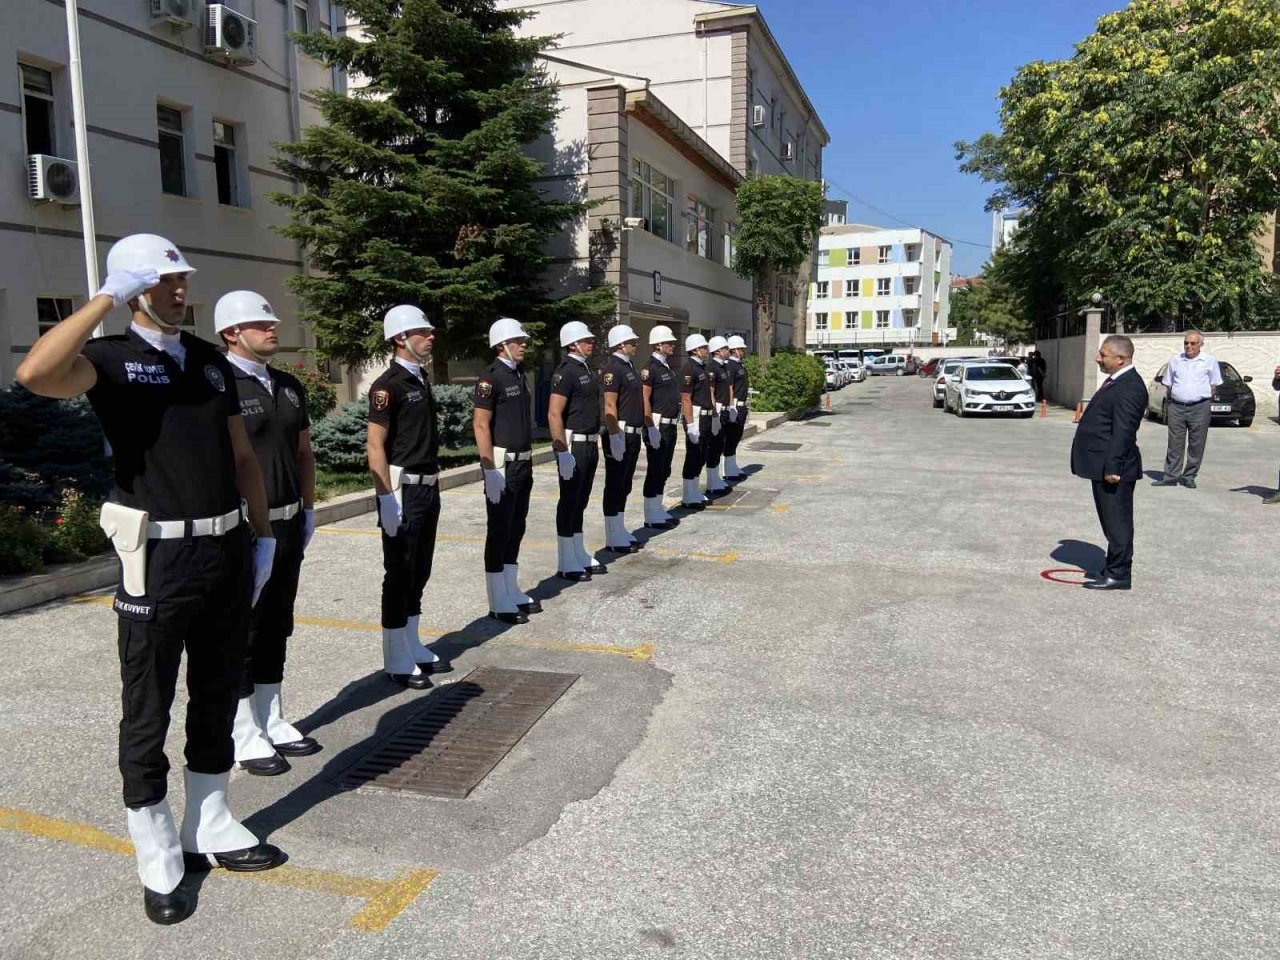 Ankara Emniyet Müdürlüğü görevine atanan Engin Dinç, Konya’ya veda etti